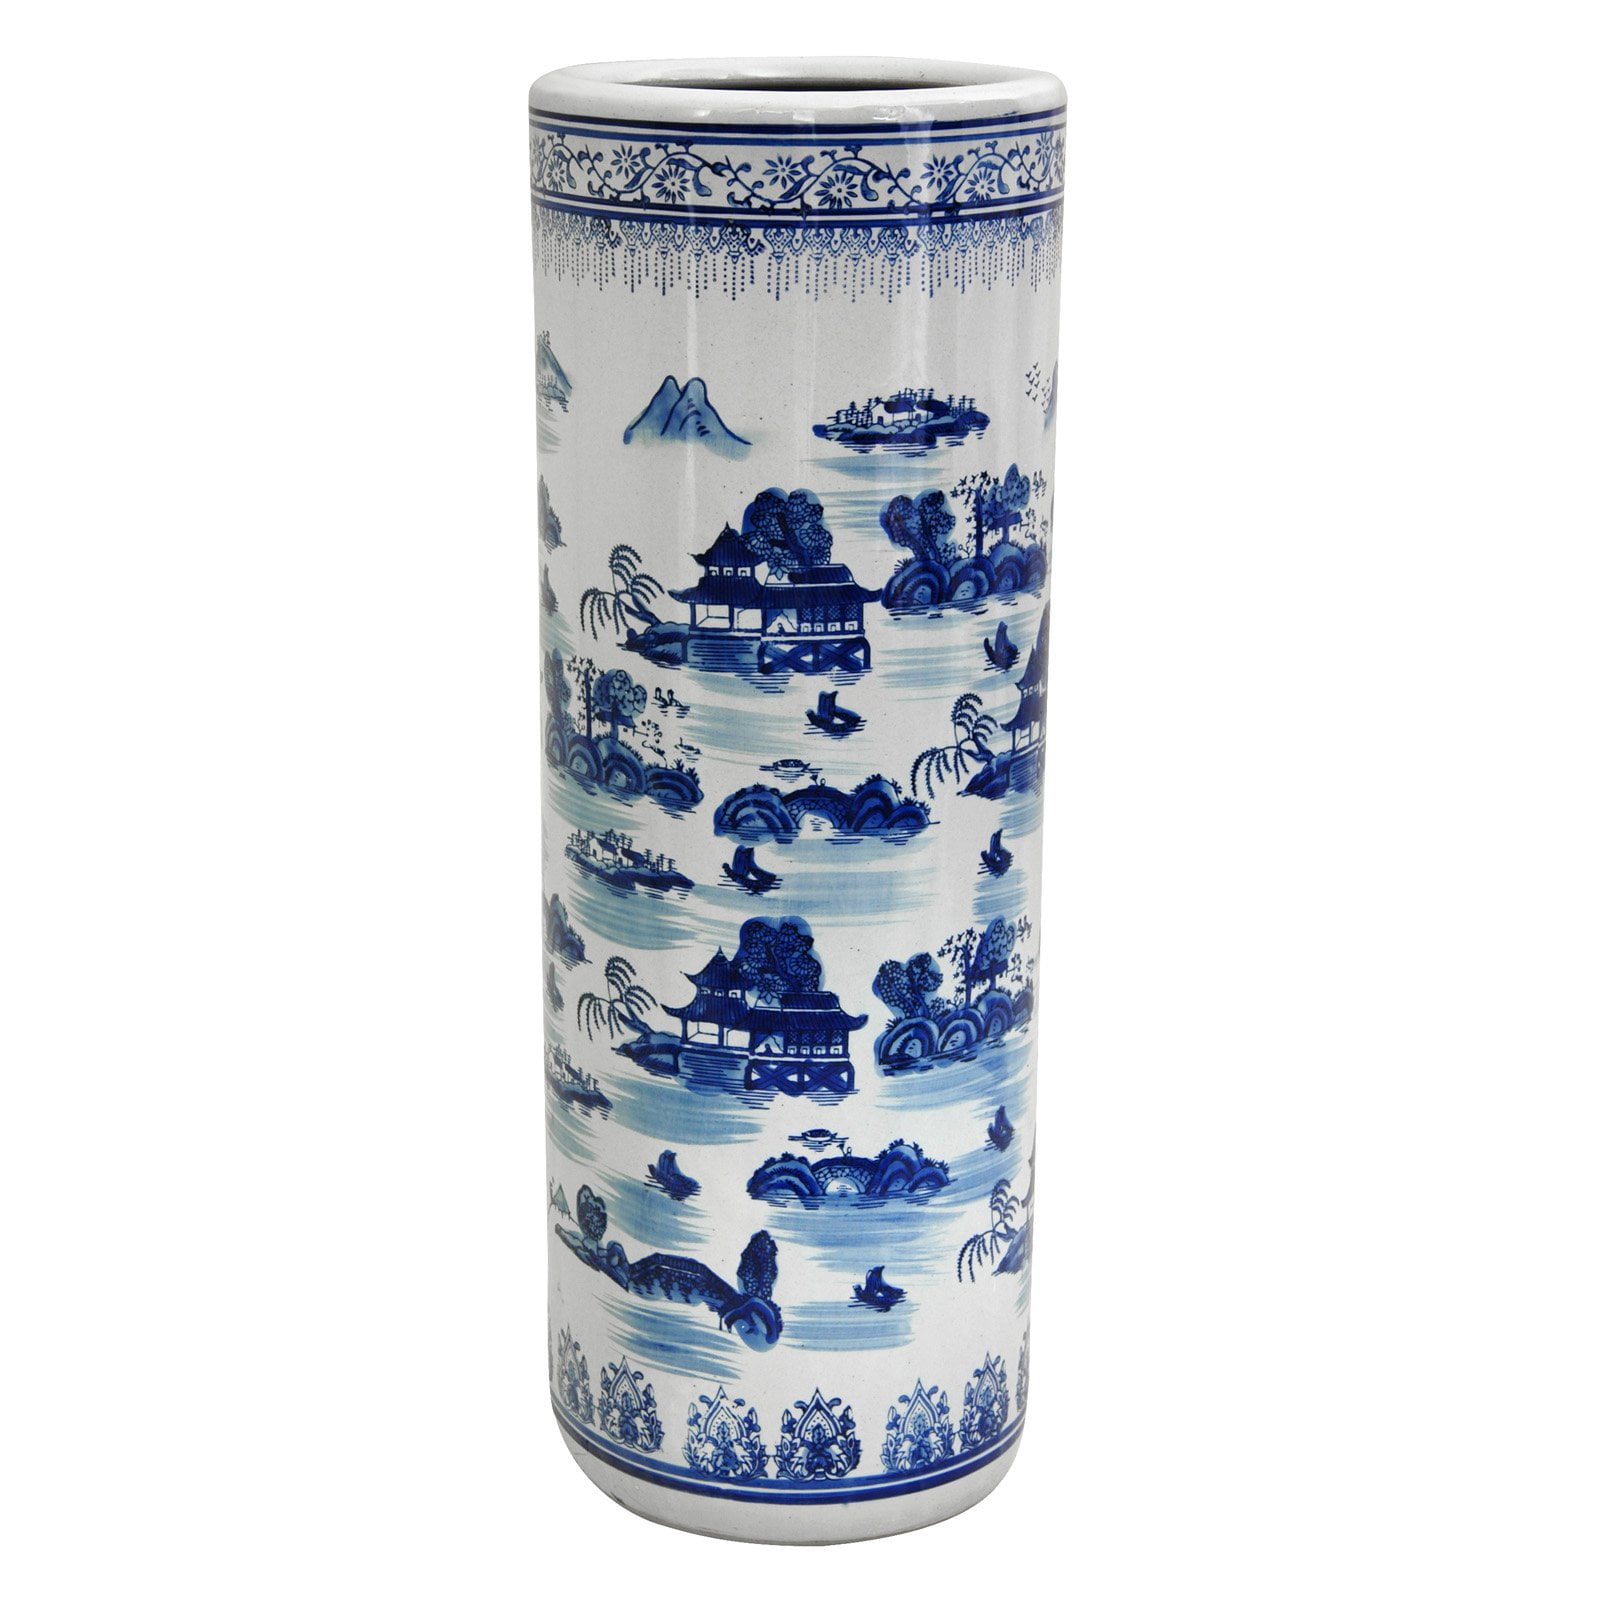 Classic Blue and White Floral 24 Porcelain Umbrella Stand Bird Design